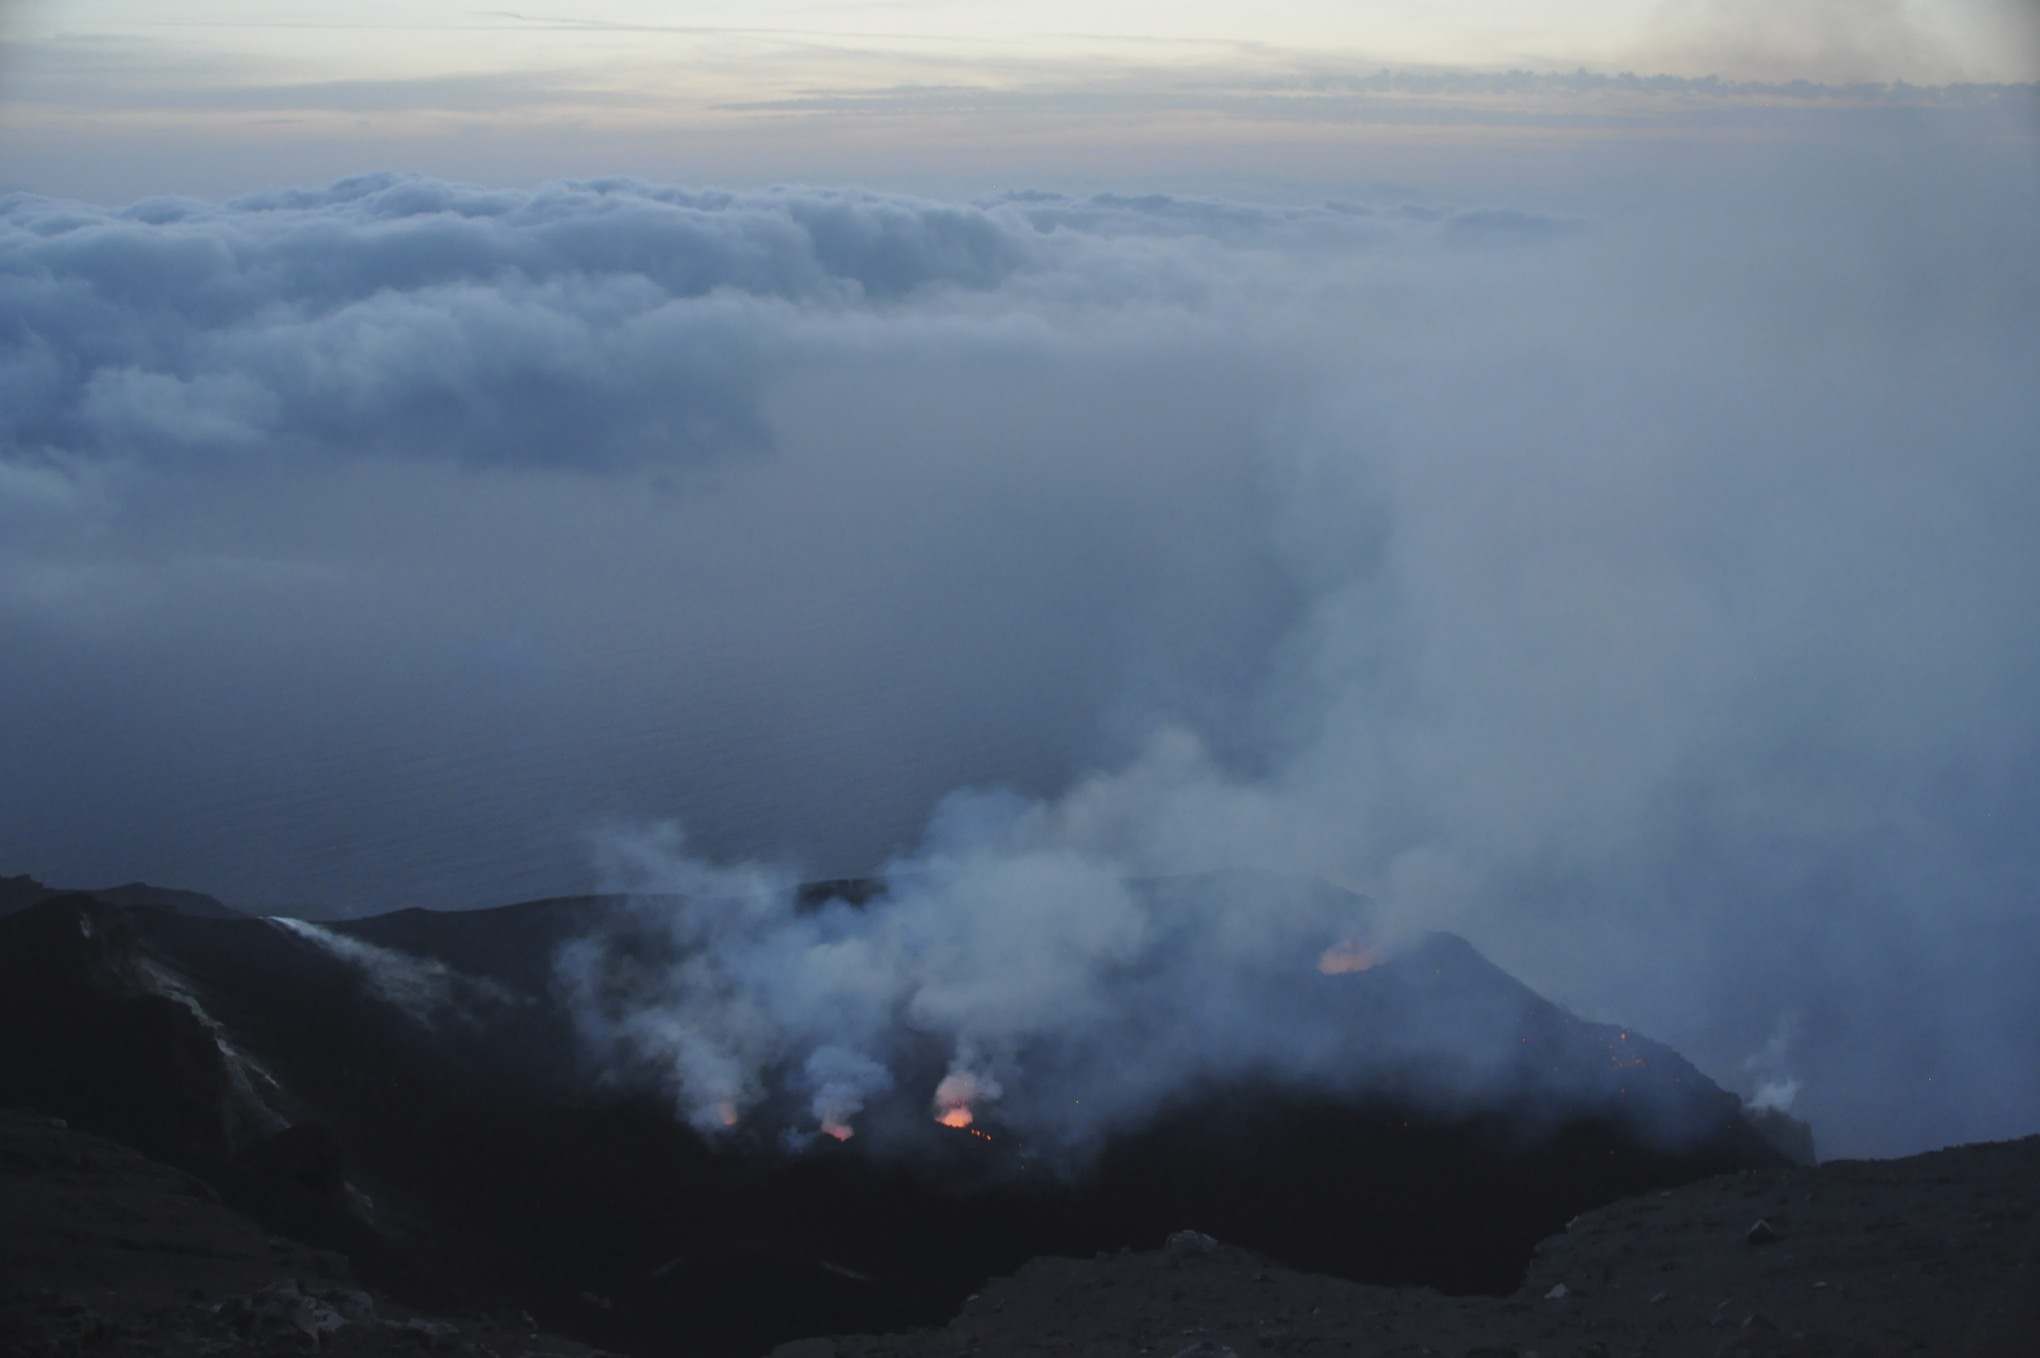 The caldera of Strombili, showing volcanic activity